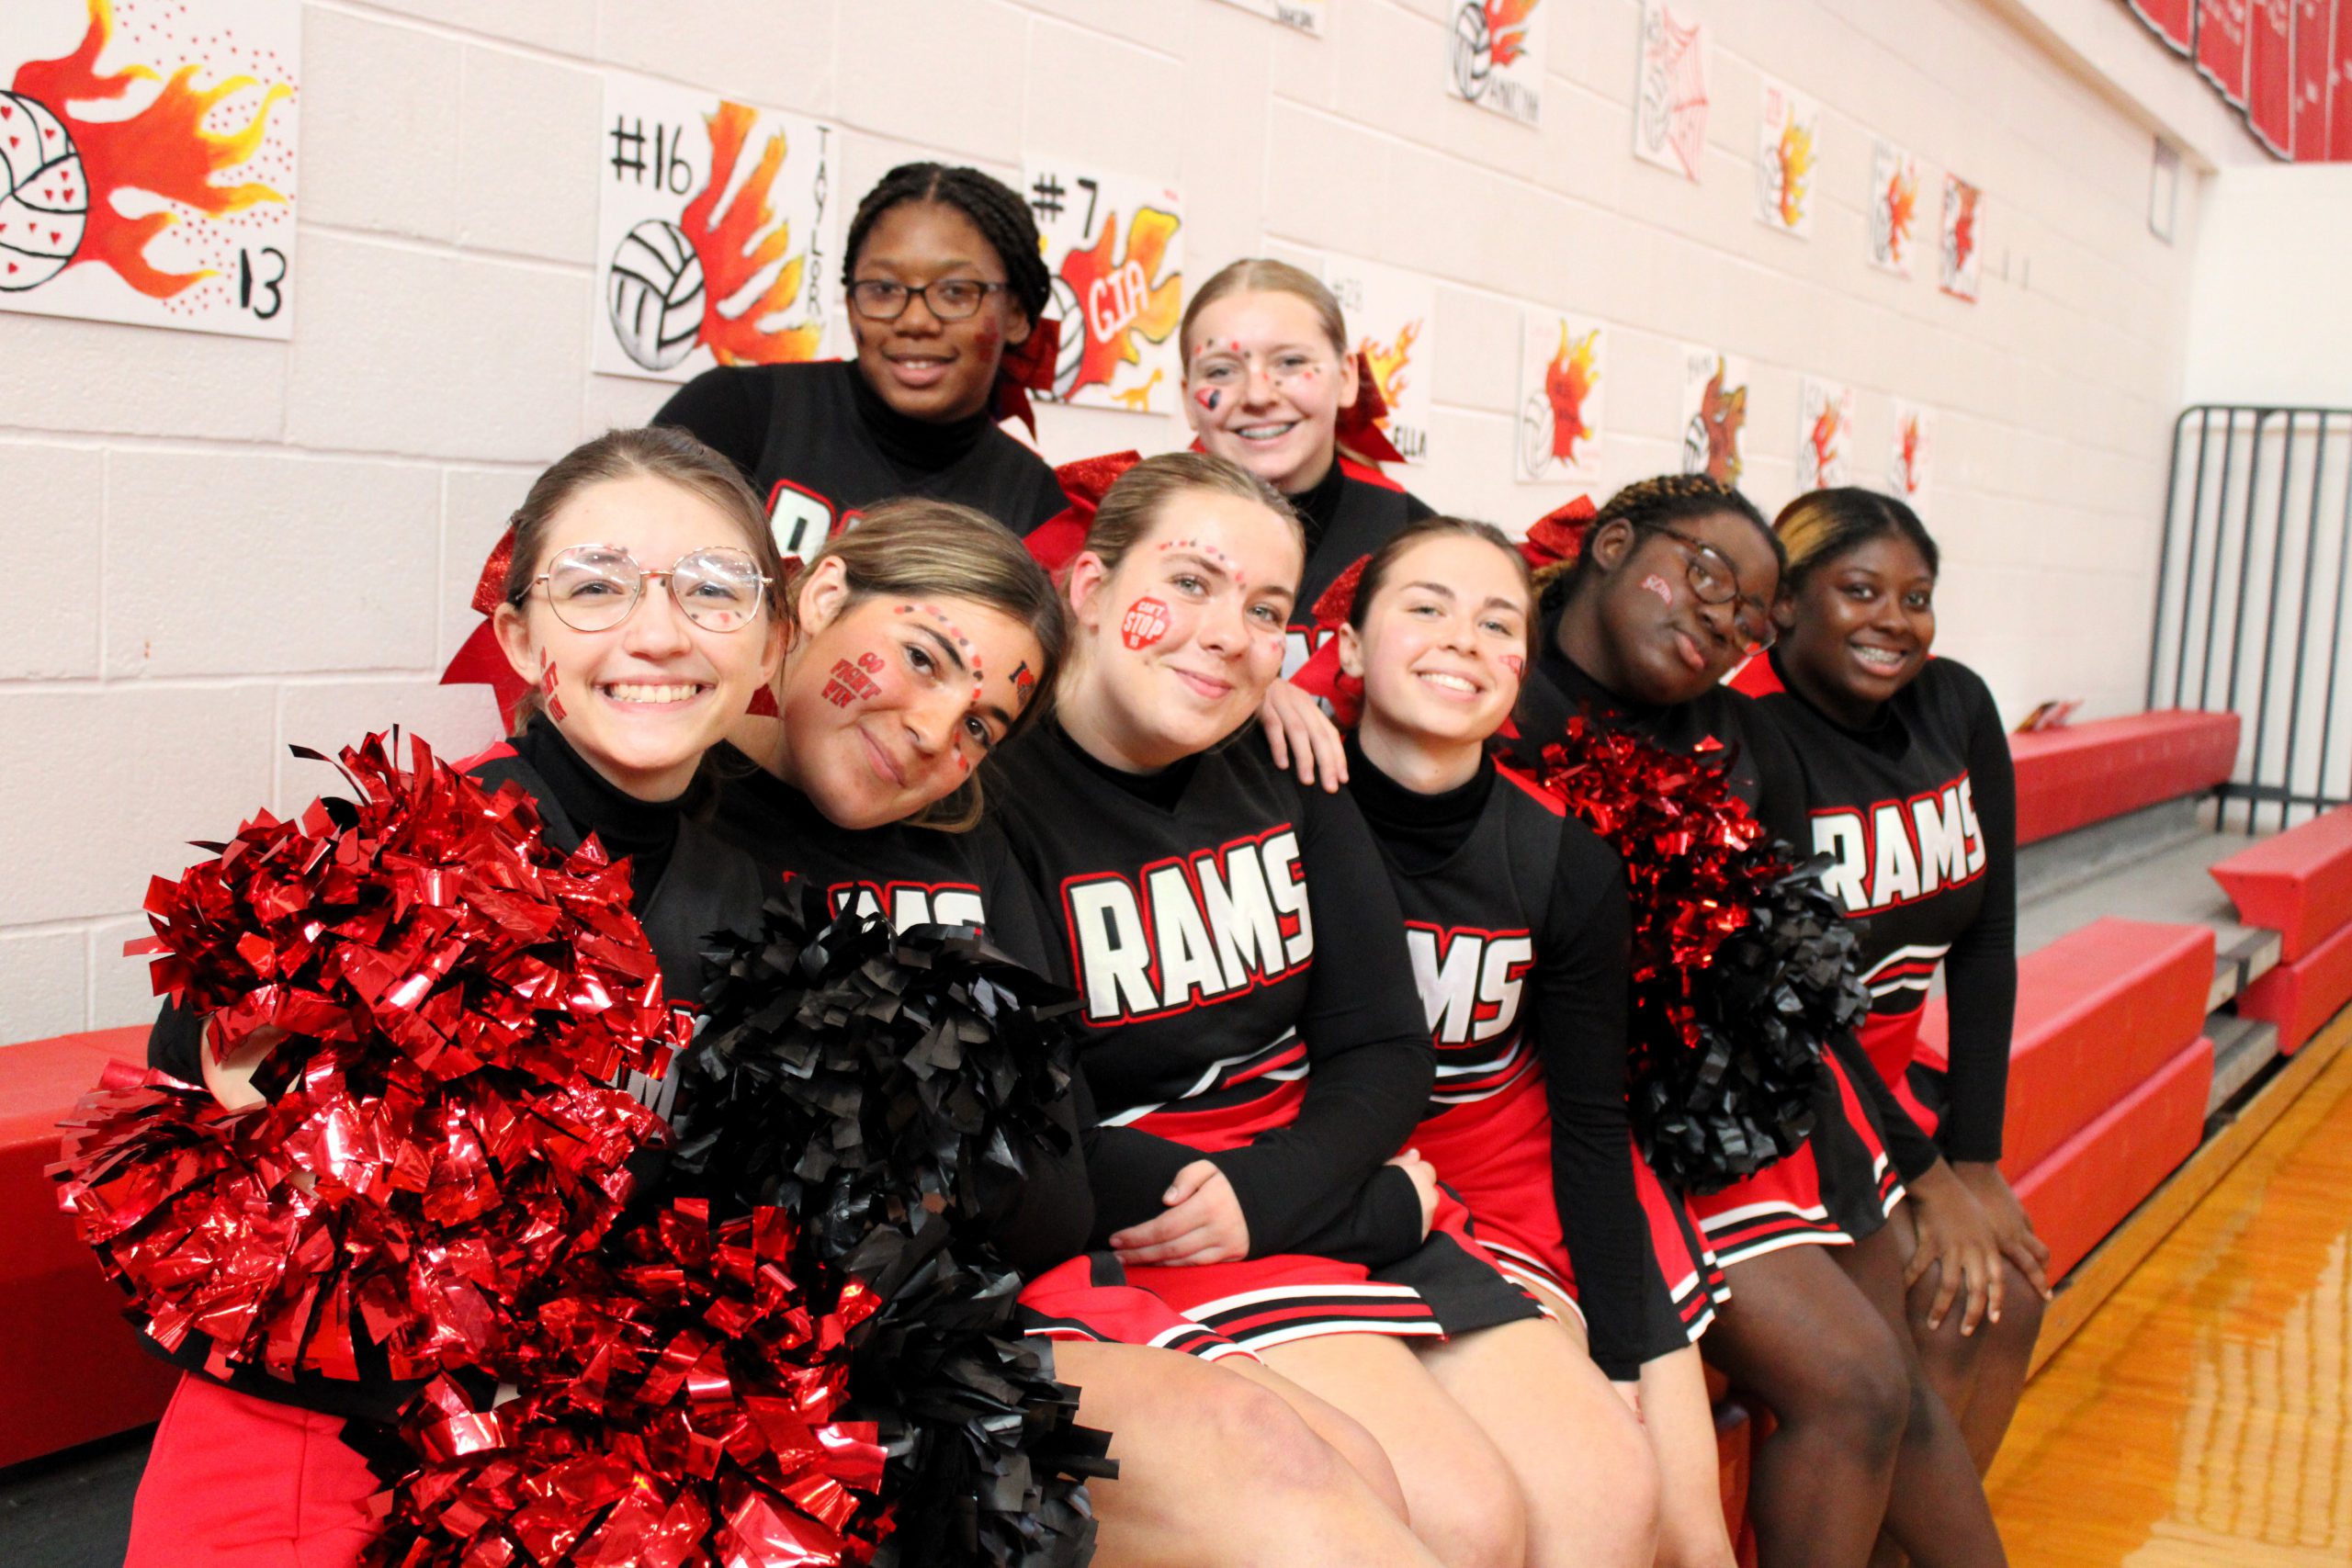 Image of J-D cheerleaders posing for photo.